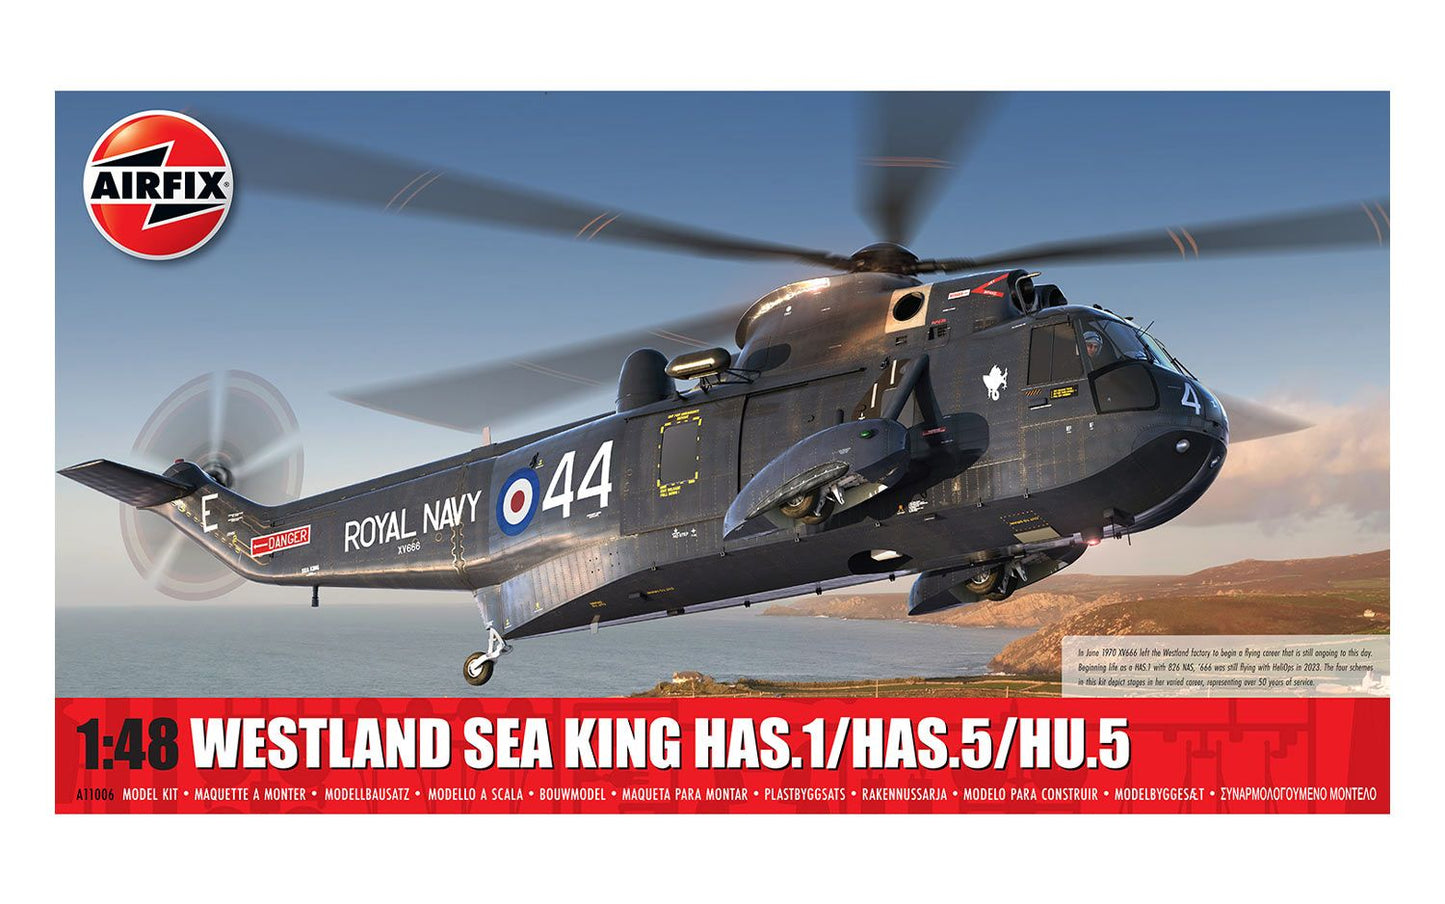 Airfix 1/48th scale Westland Sea King HAS.1/HAS.5/HU.5